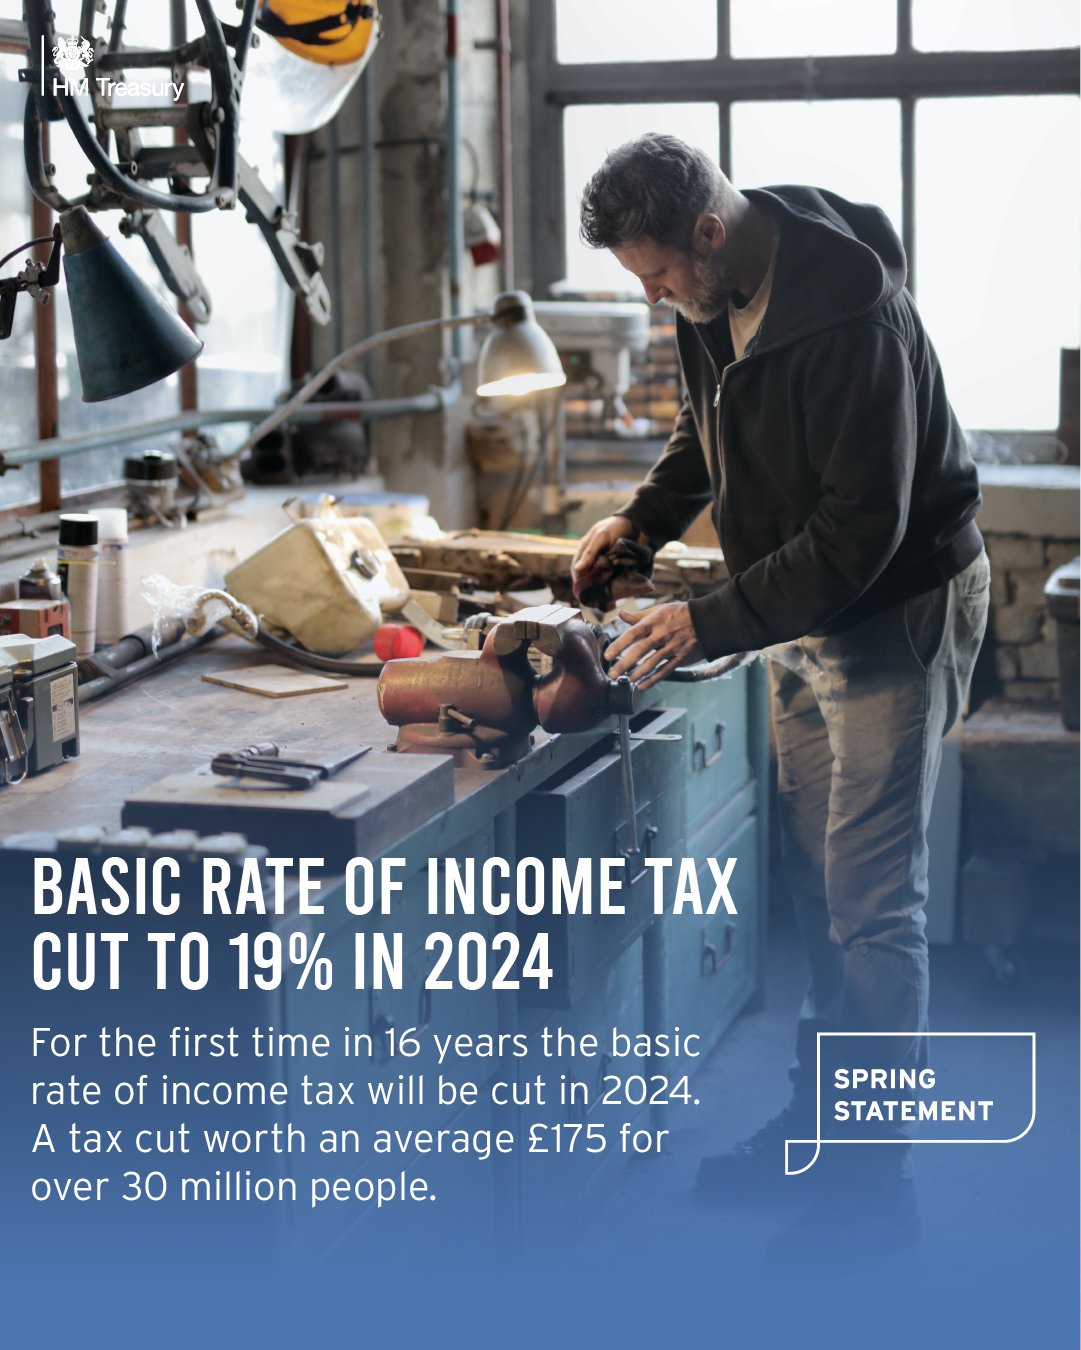 Spring Statement - Income Tax Cut